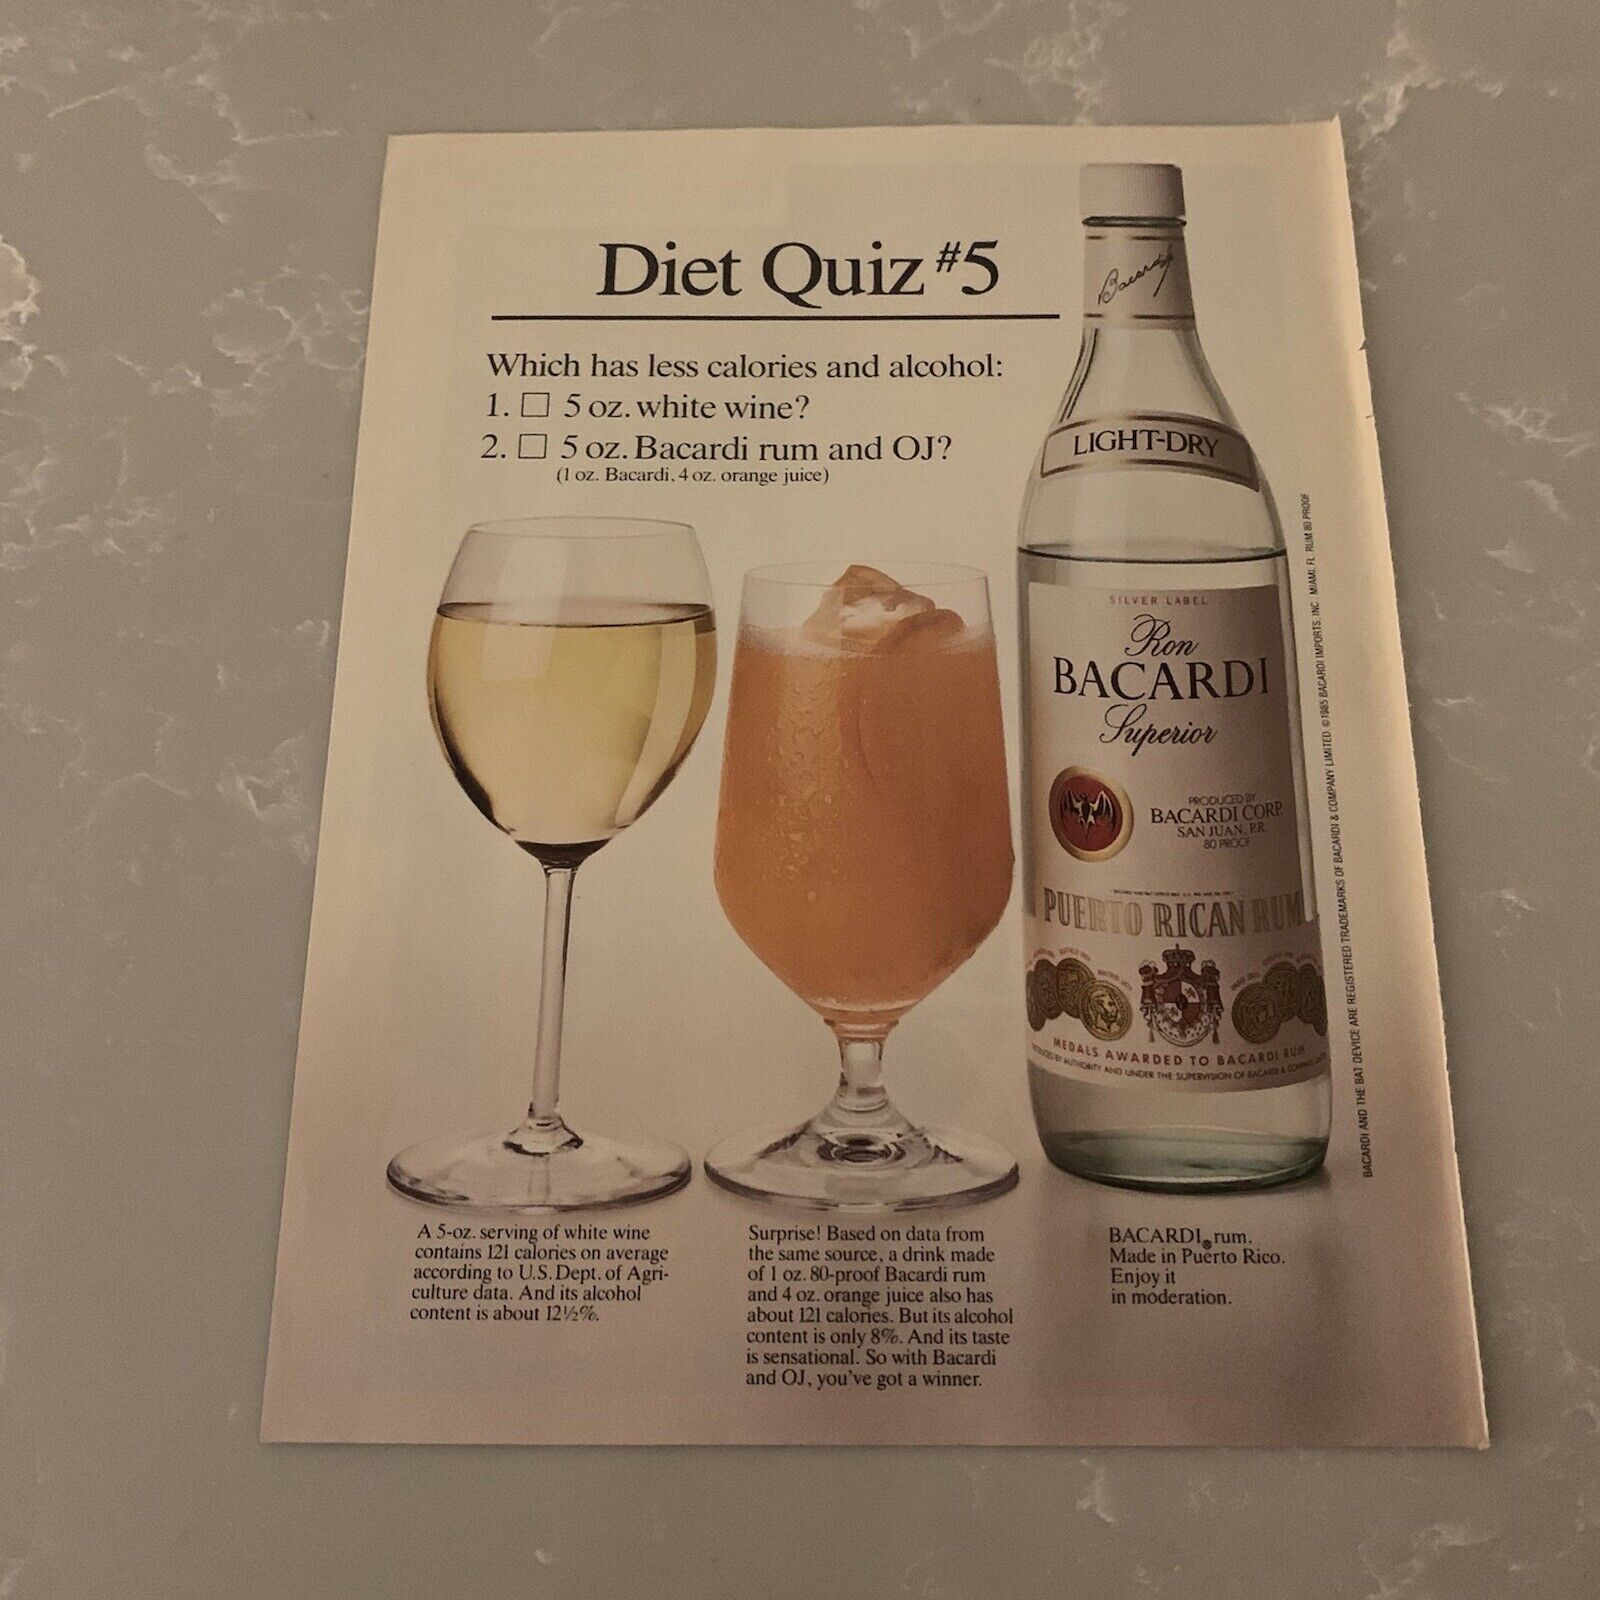 1985 Bacardi Rum Print Ad Original Vintage Diet Quiz #5 Rum and OJ vs White Wine